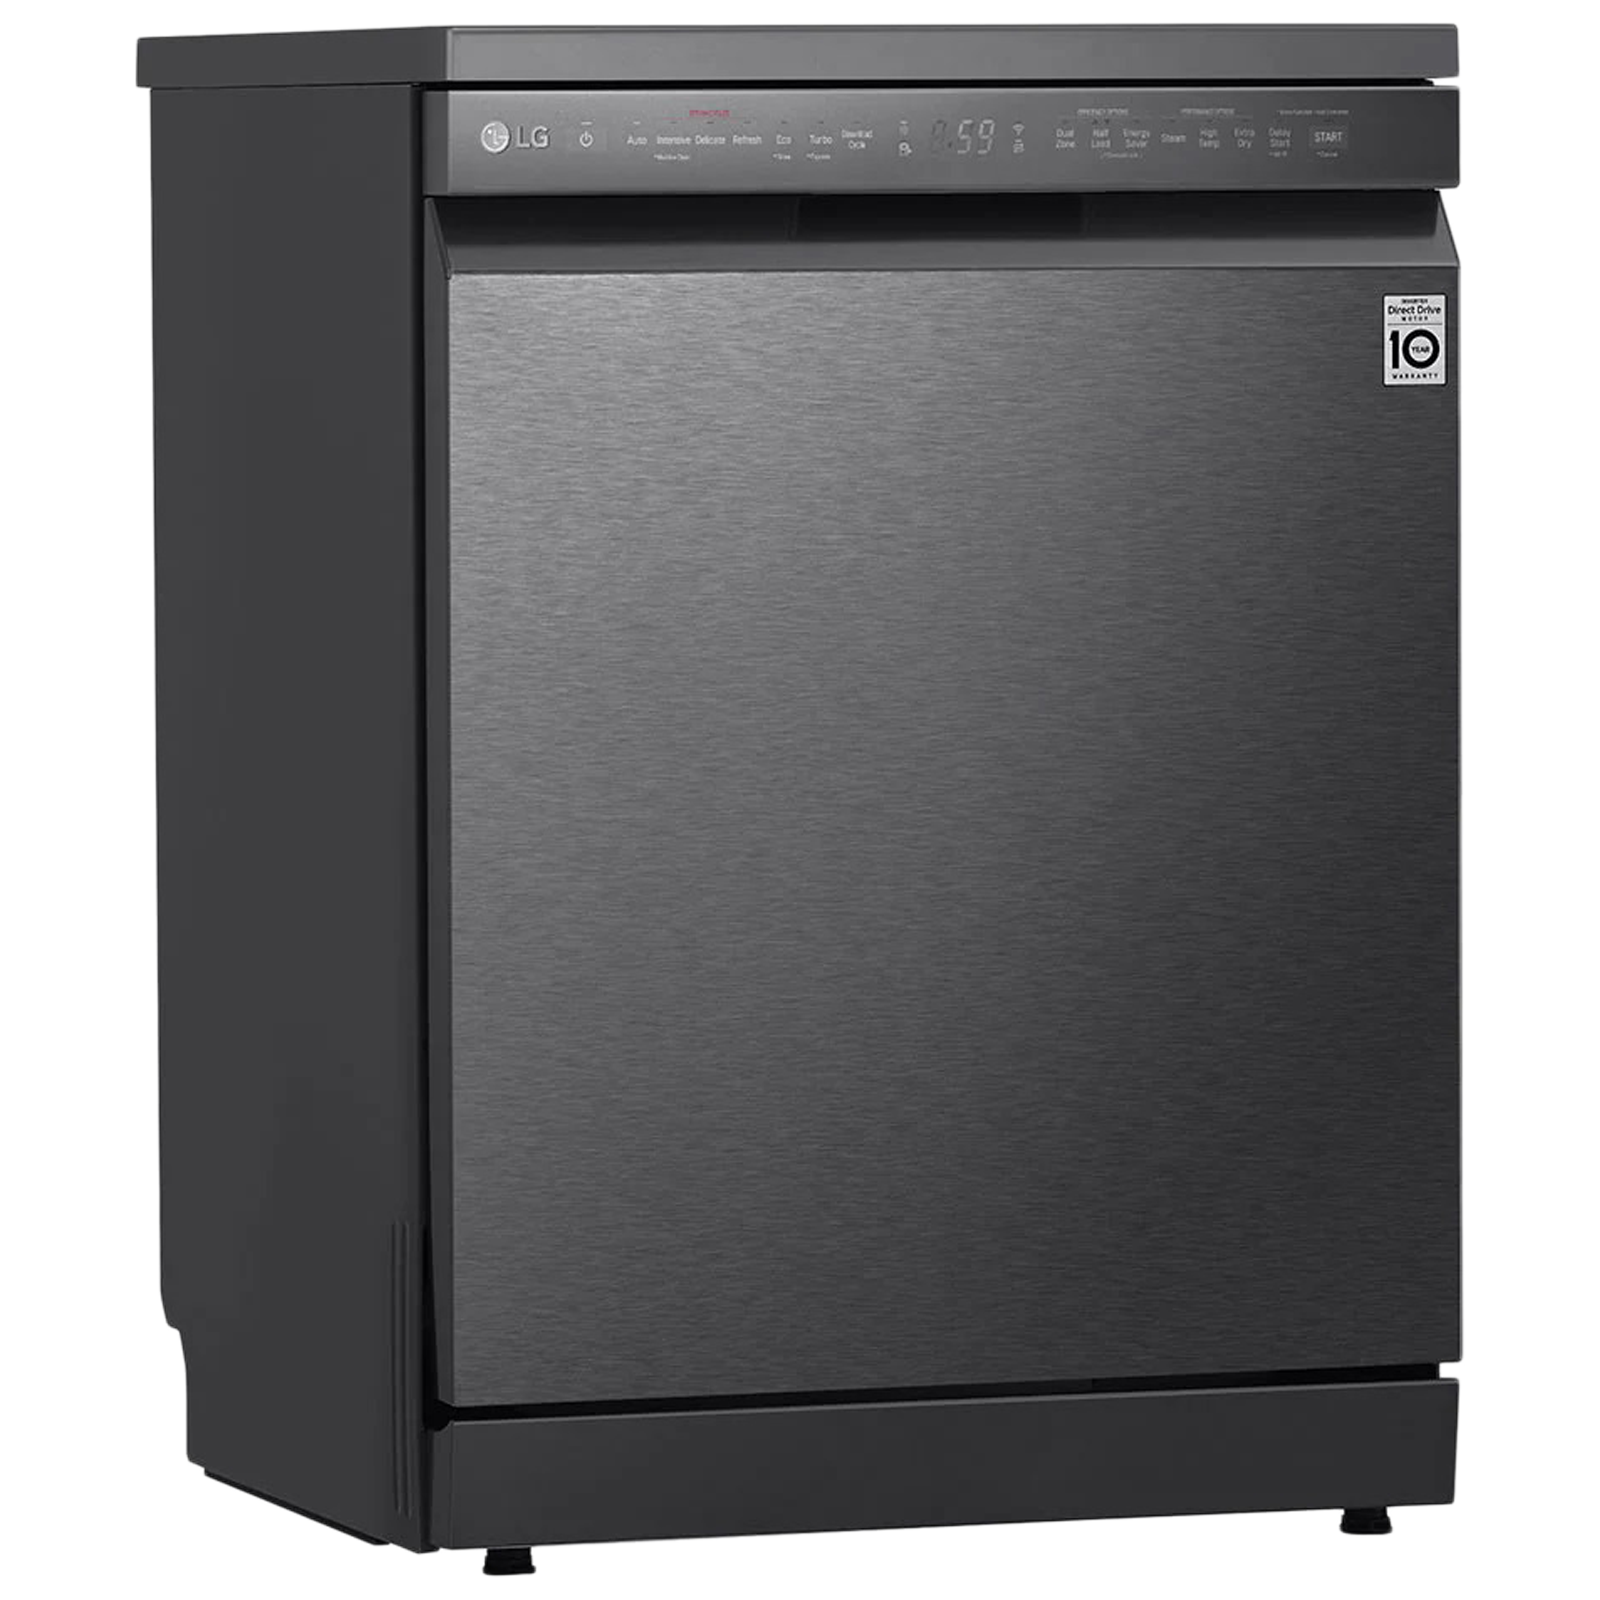 LG 14 Place Setting Freestanding Dishwasher (Inverter Direct Drive Technology, DFB424FM.ABMPEIL, Matt Black)_2